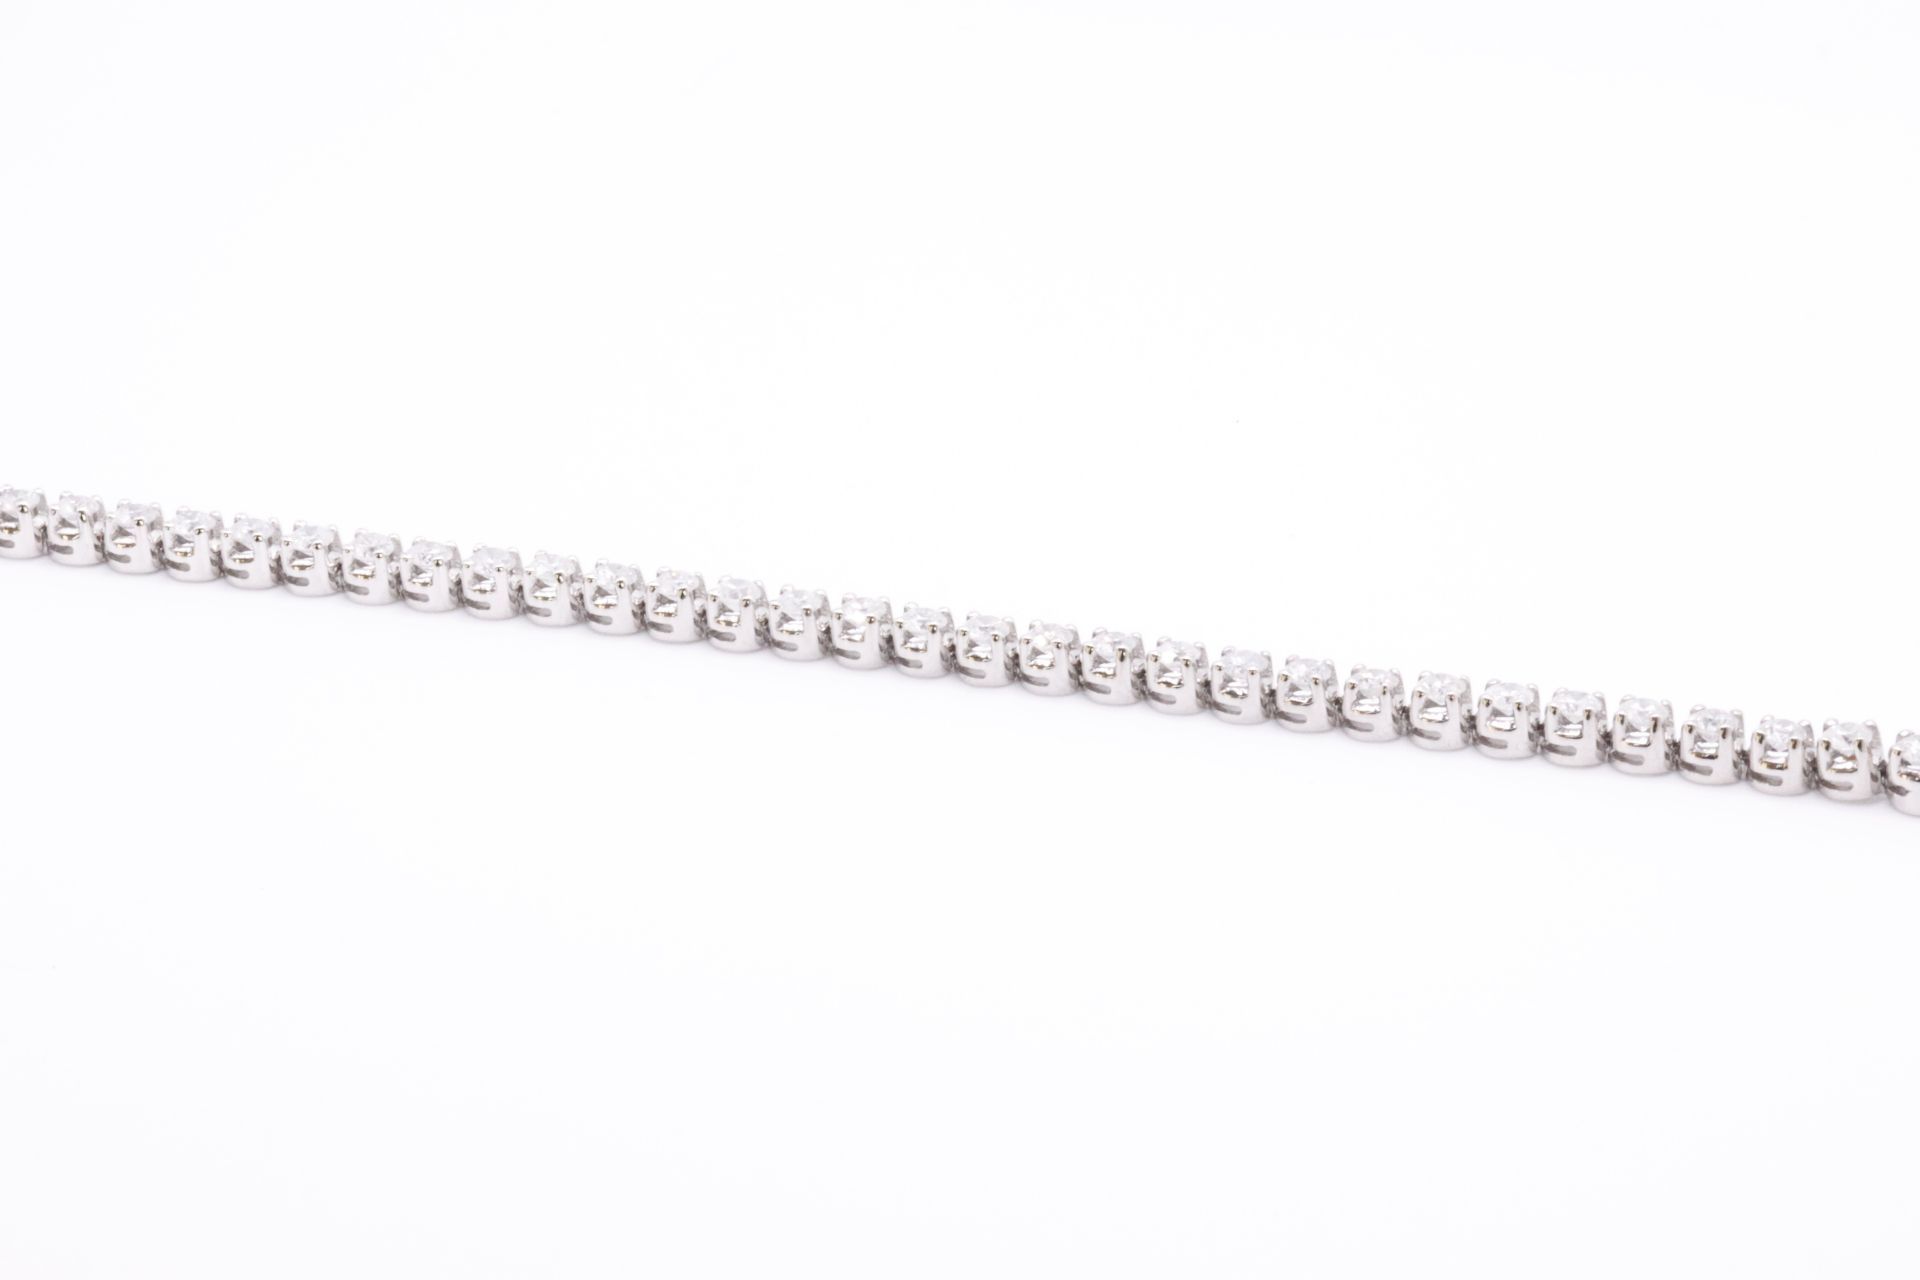 Brand New 7.0 Carat 18ct White Gold Tennis Bracelet set with Round Brilliant Cut Natural Diamonds - Image 8 of 16